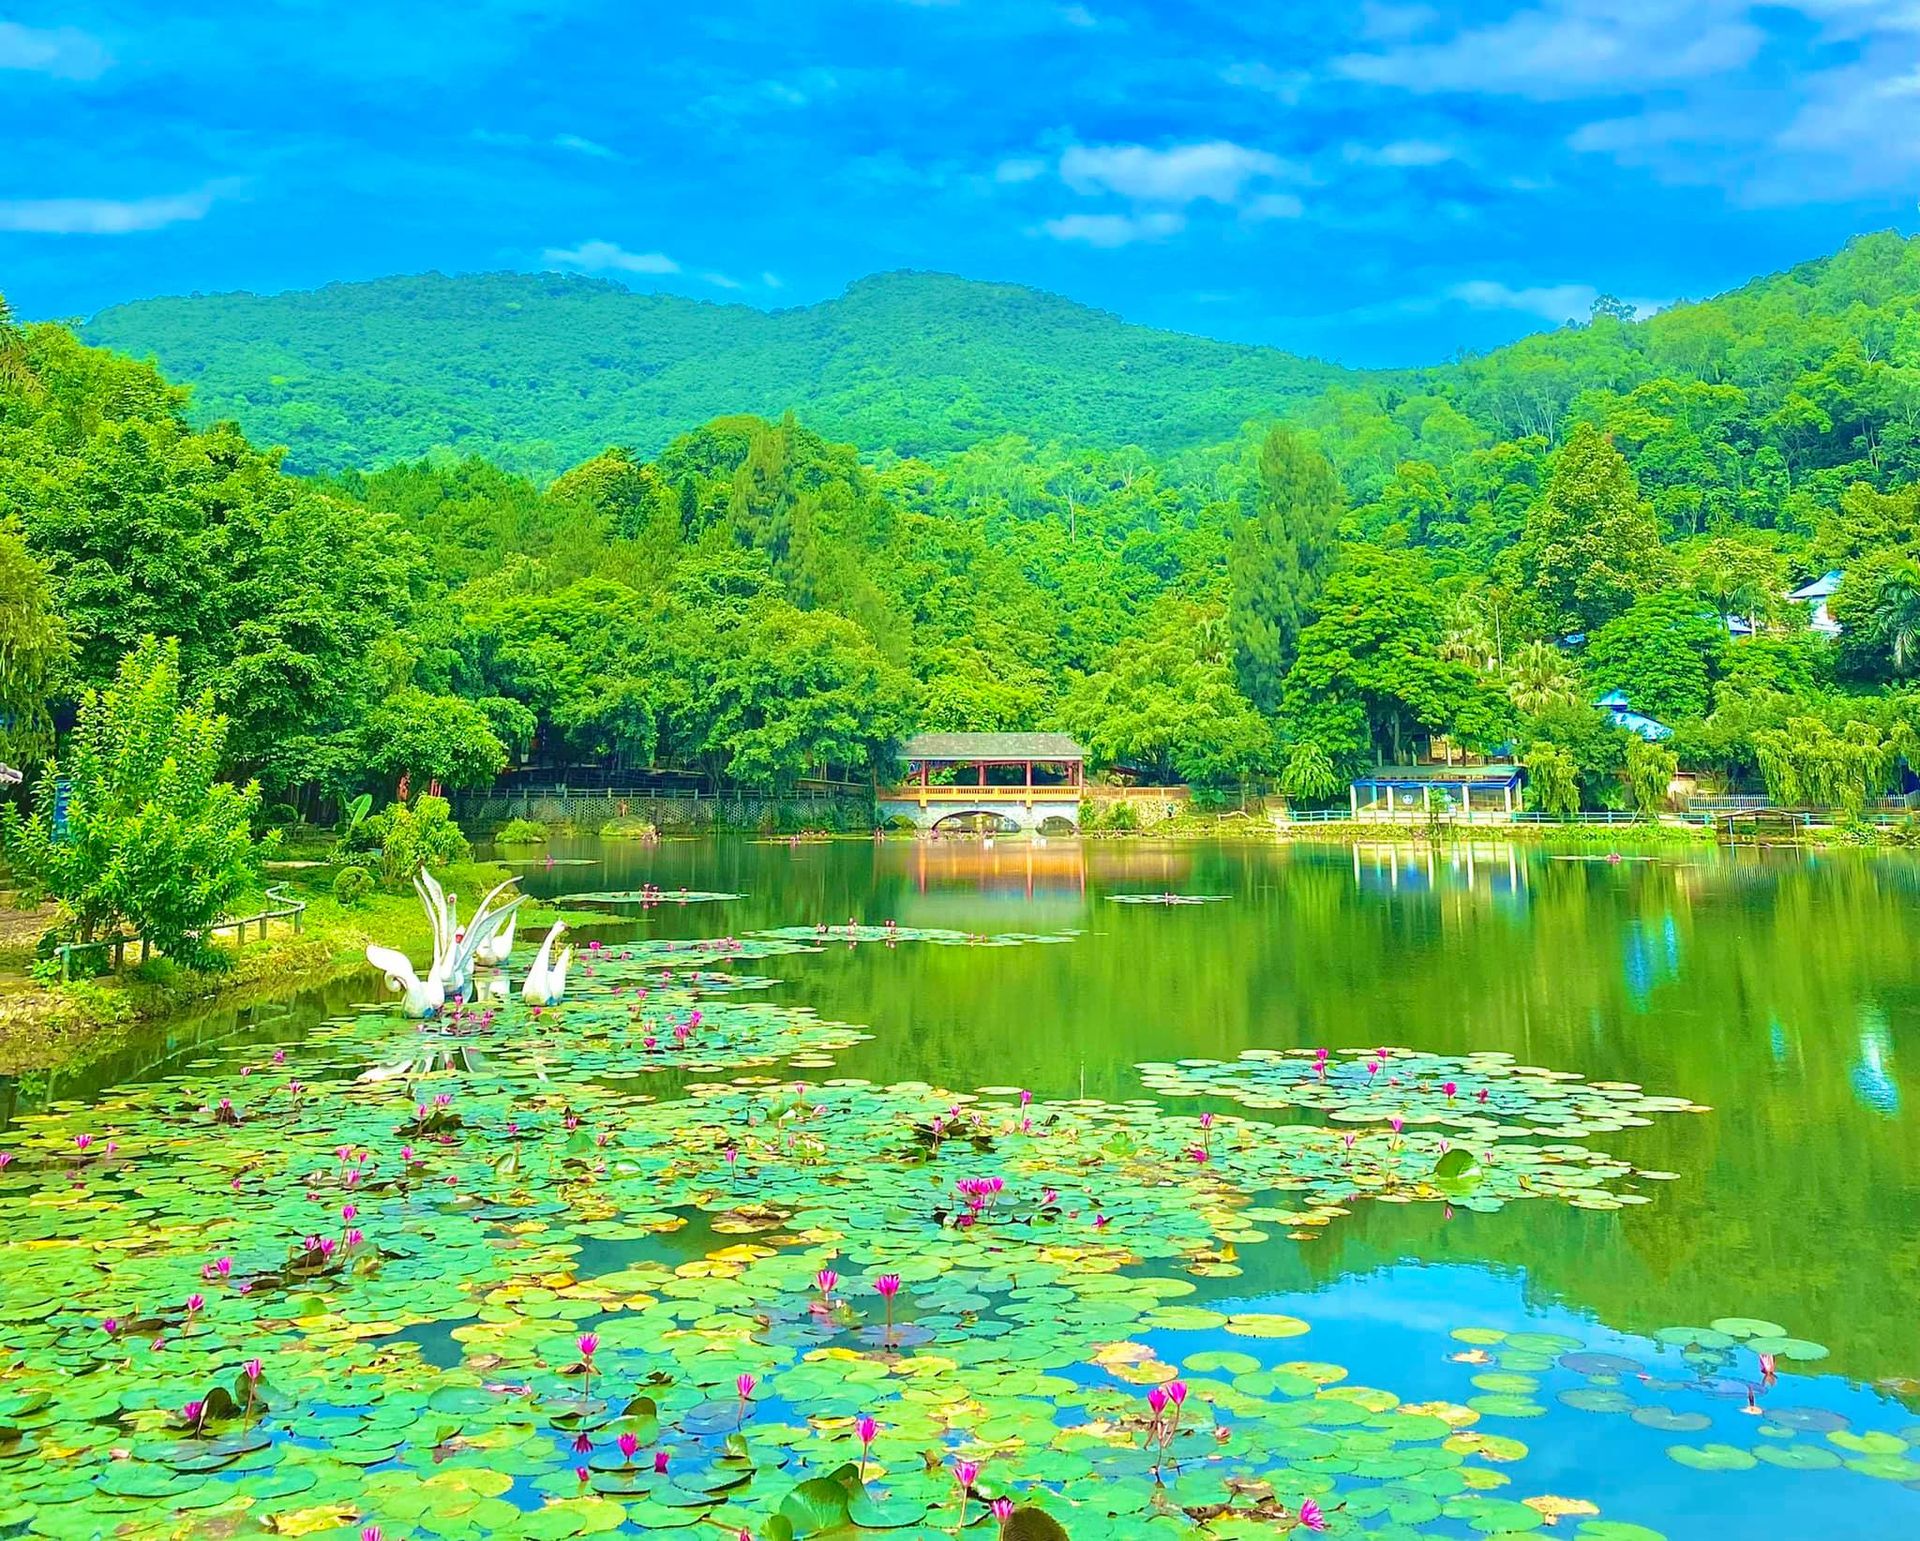 King's Pond tourist area in Ha Noi